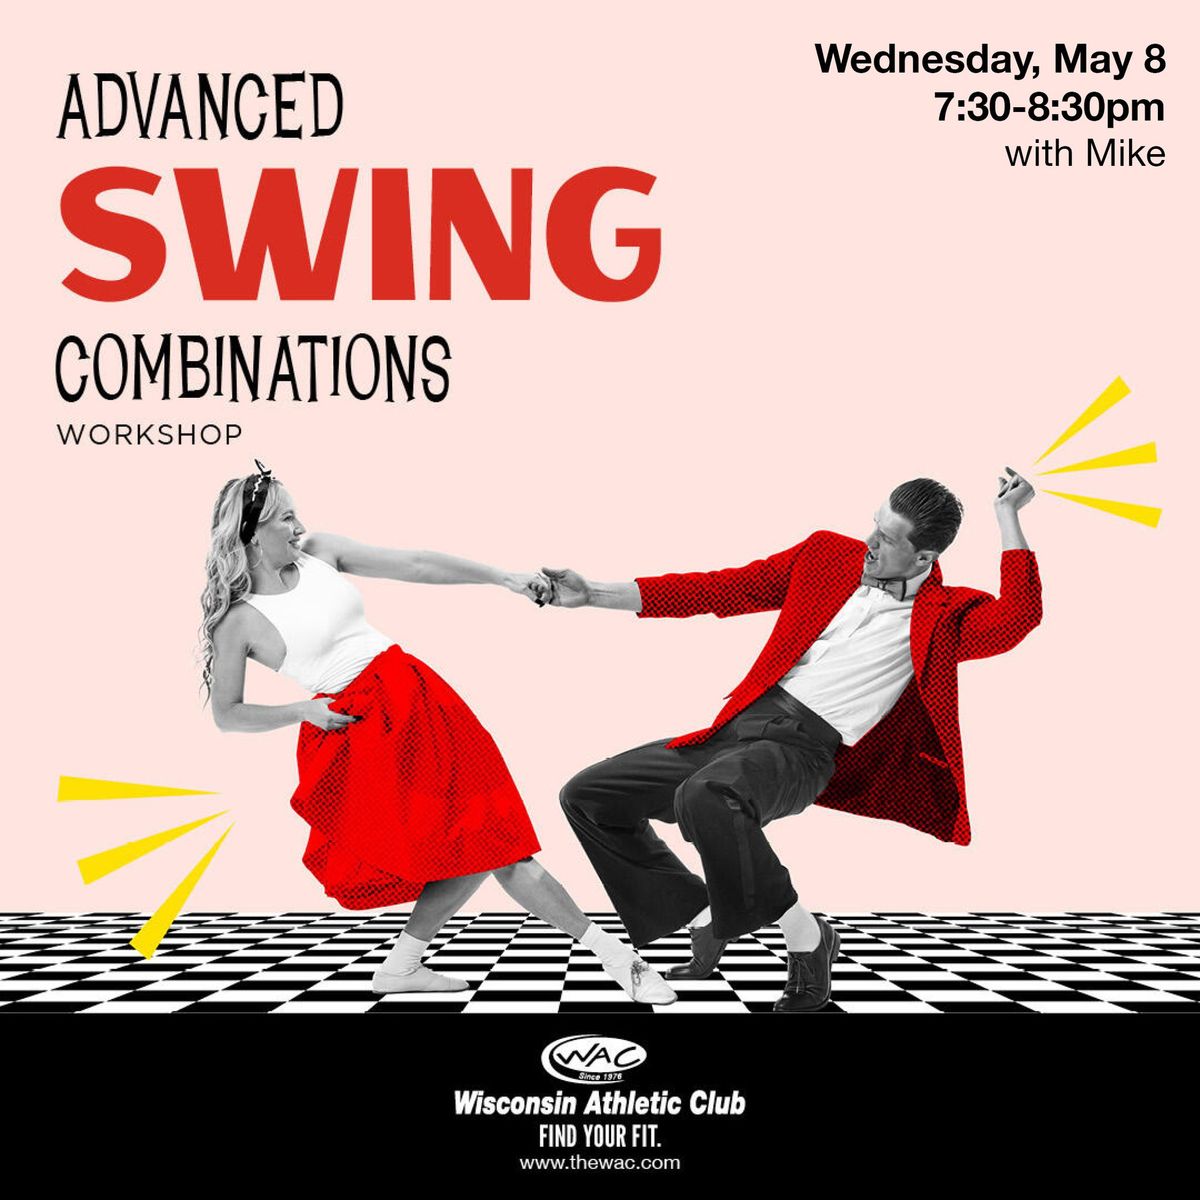 Advanced Swing Combinations Workshop